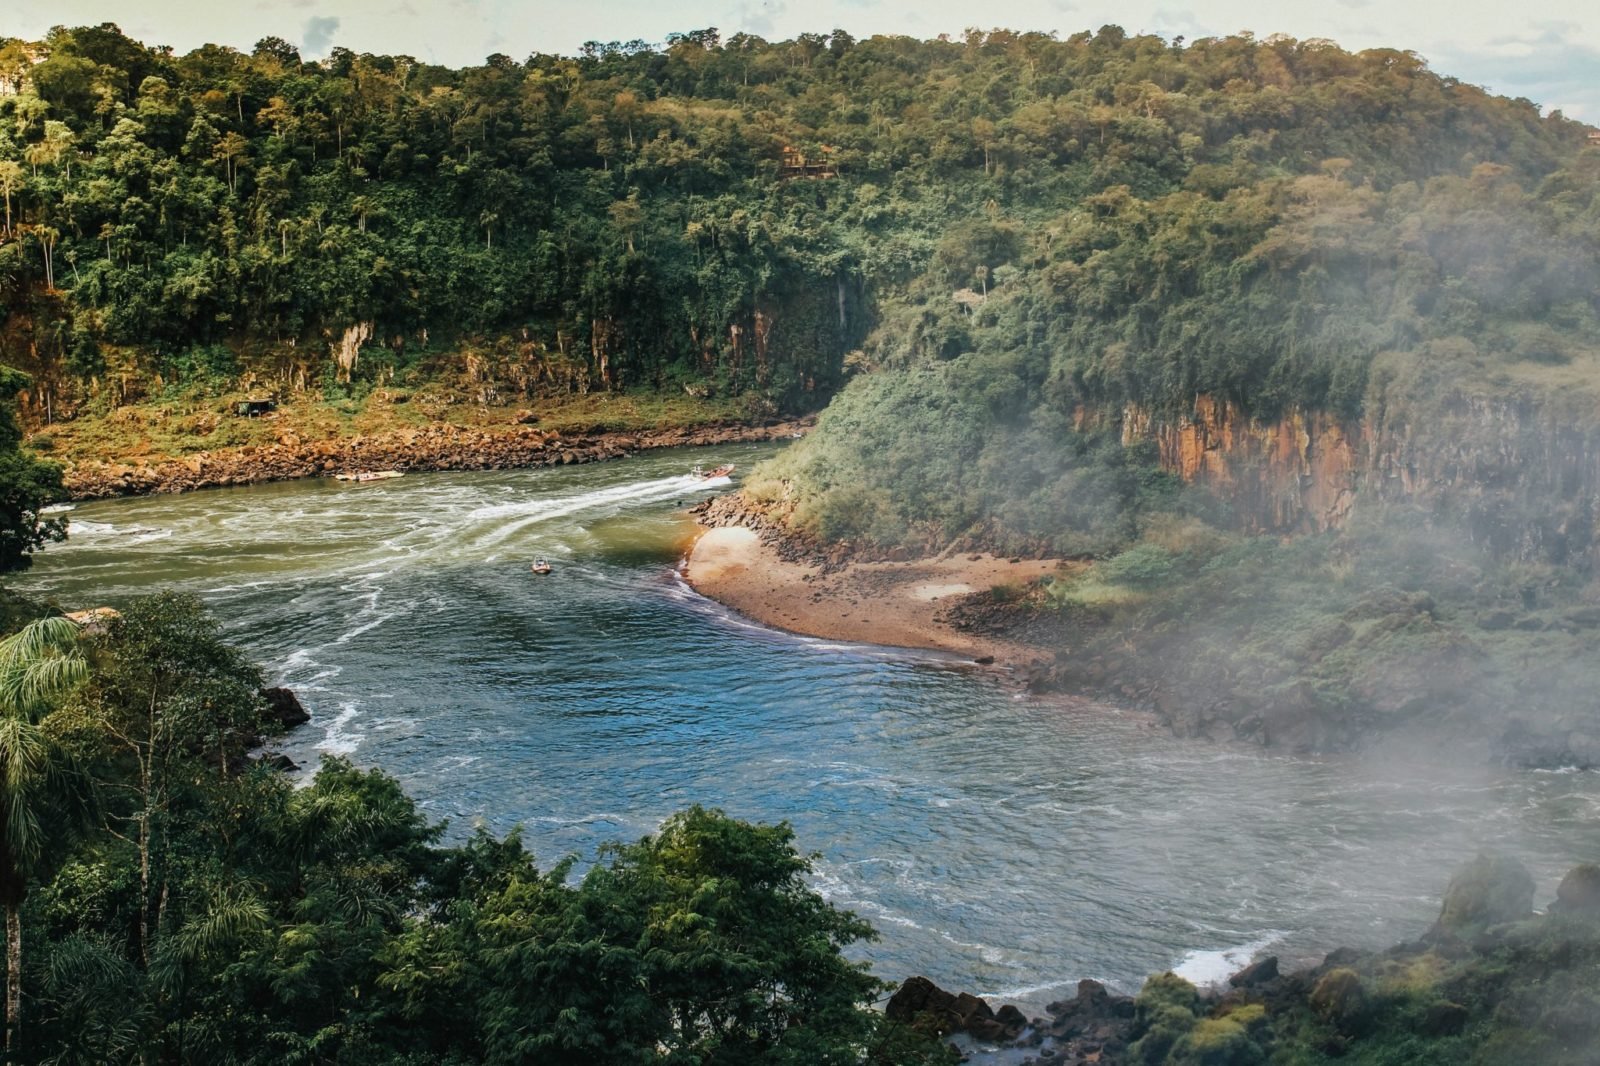 A boat approaching the base of the falls. Iguazu Falls trip